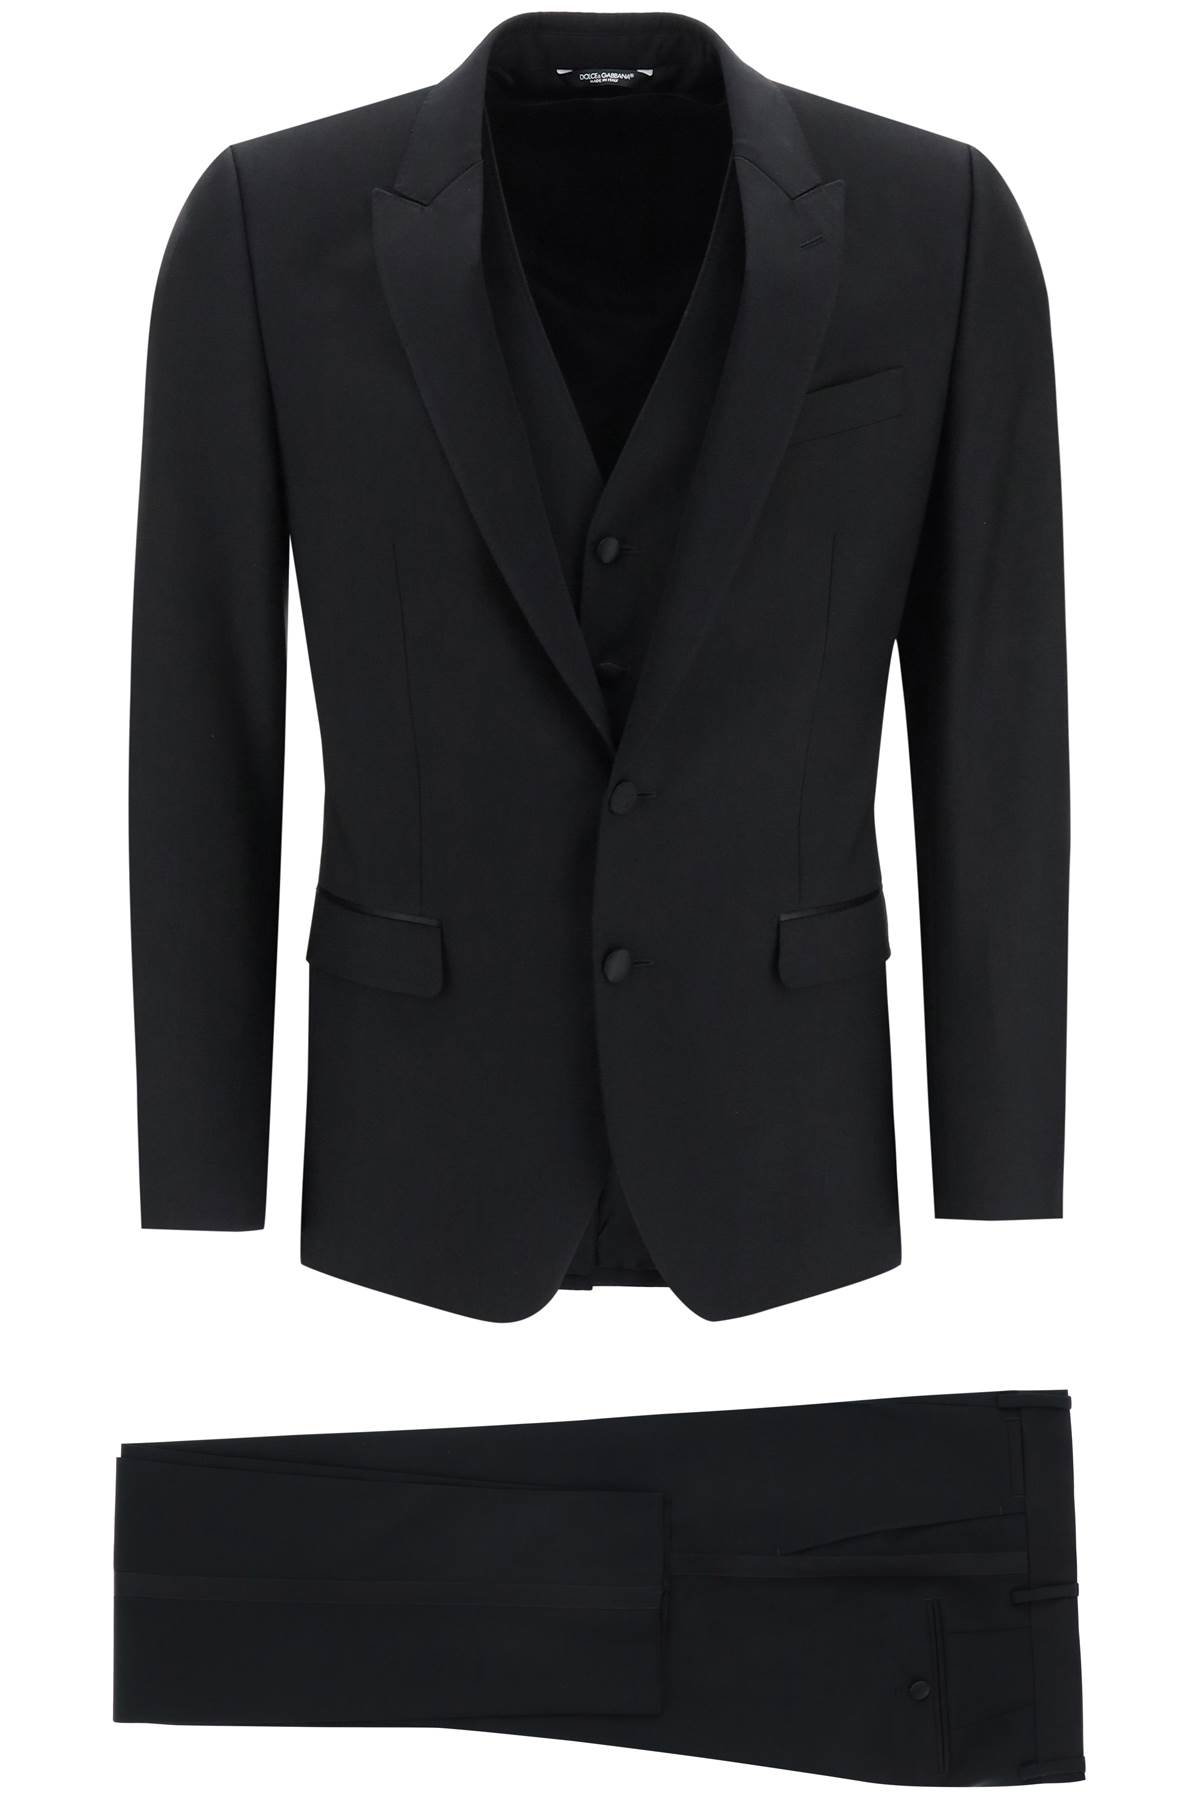 Dolce & Gabbana Martini Fit 3-piece Tuxedo Suit